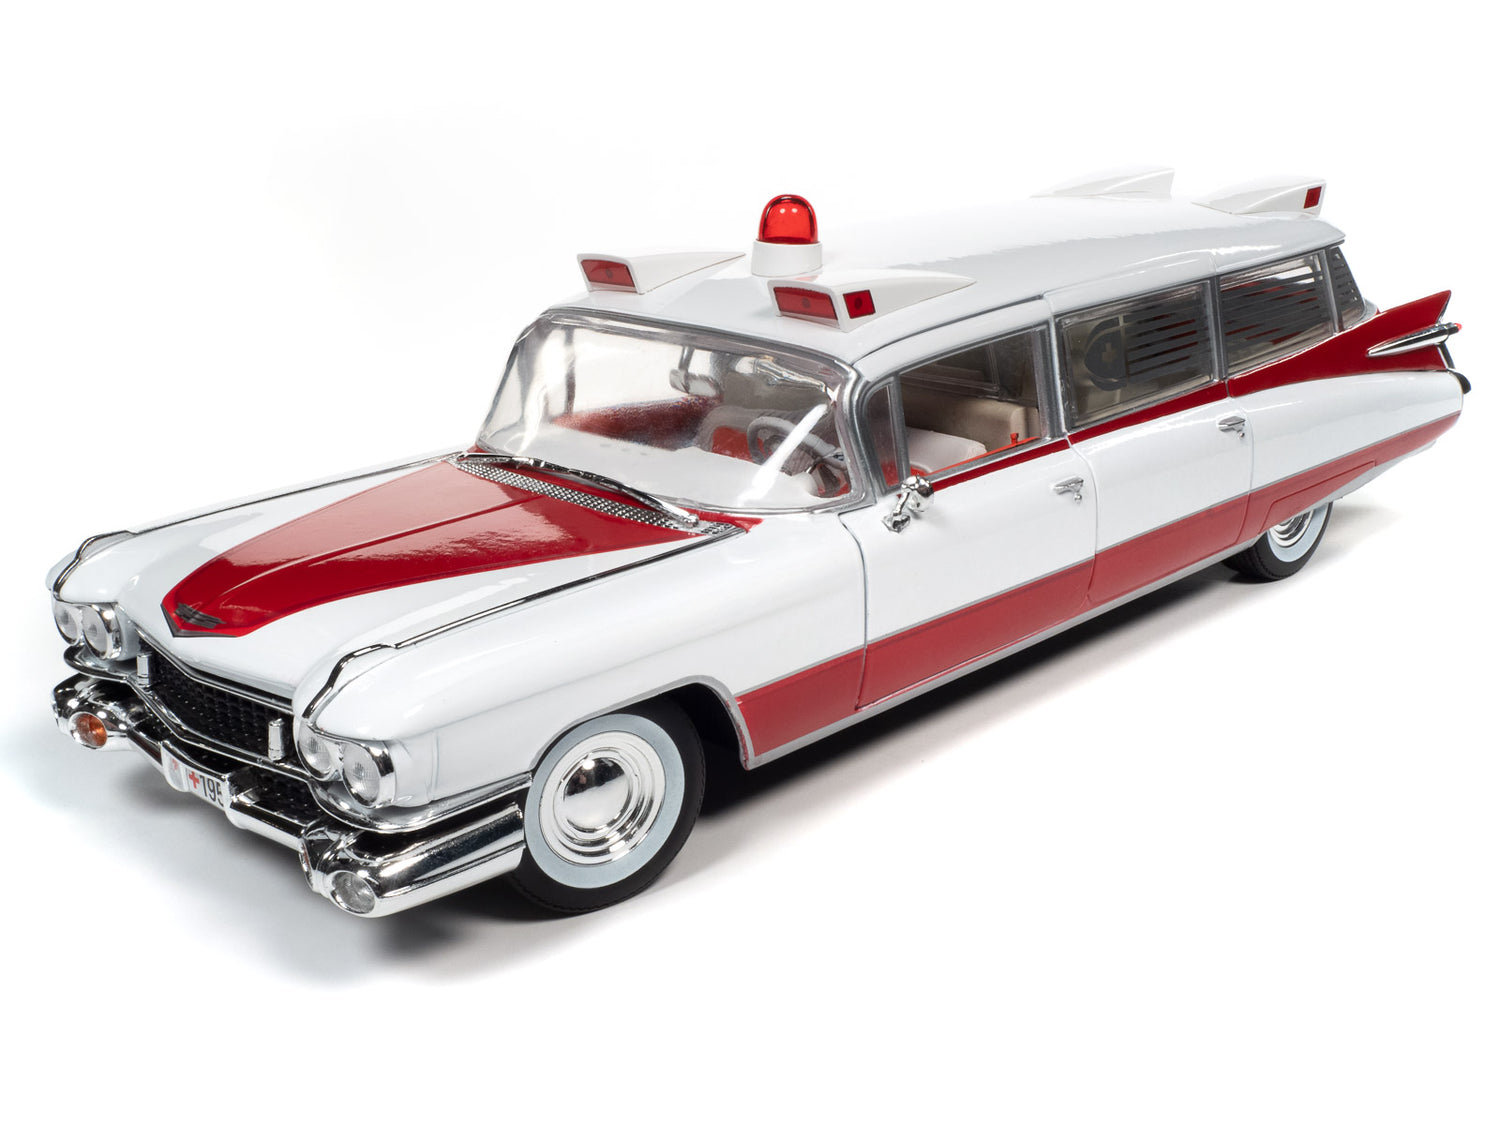 Auto World 1959 Cadillac Eldorado Ambulance 1:18 Scale Diecast